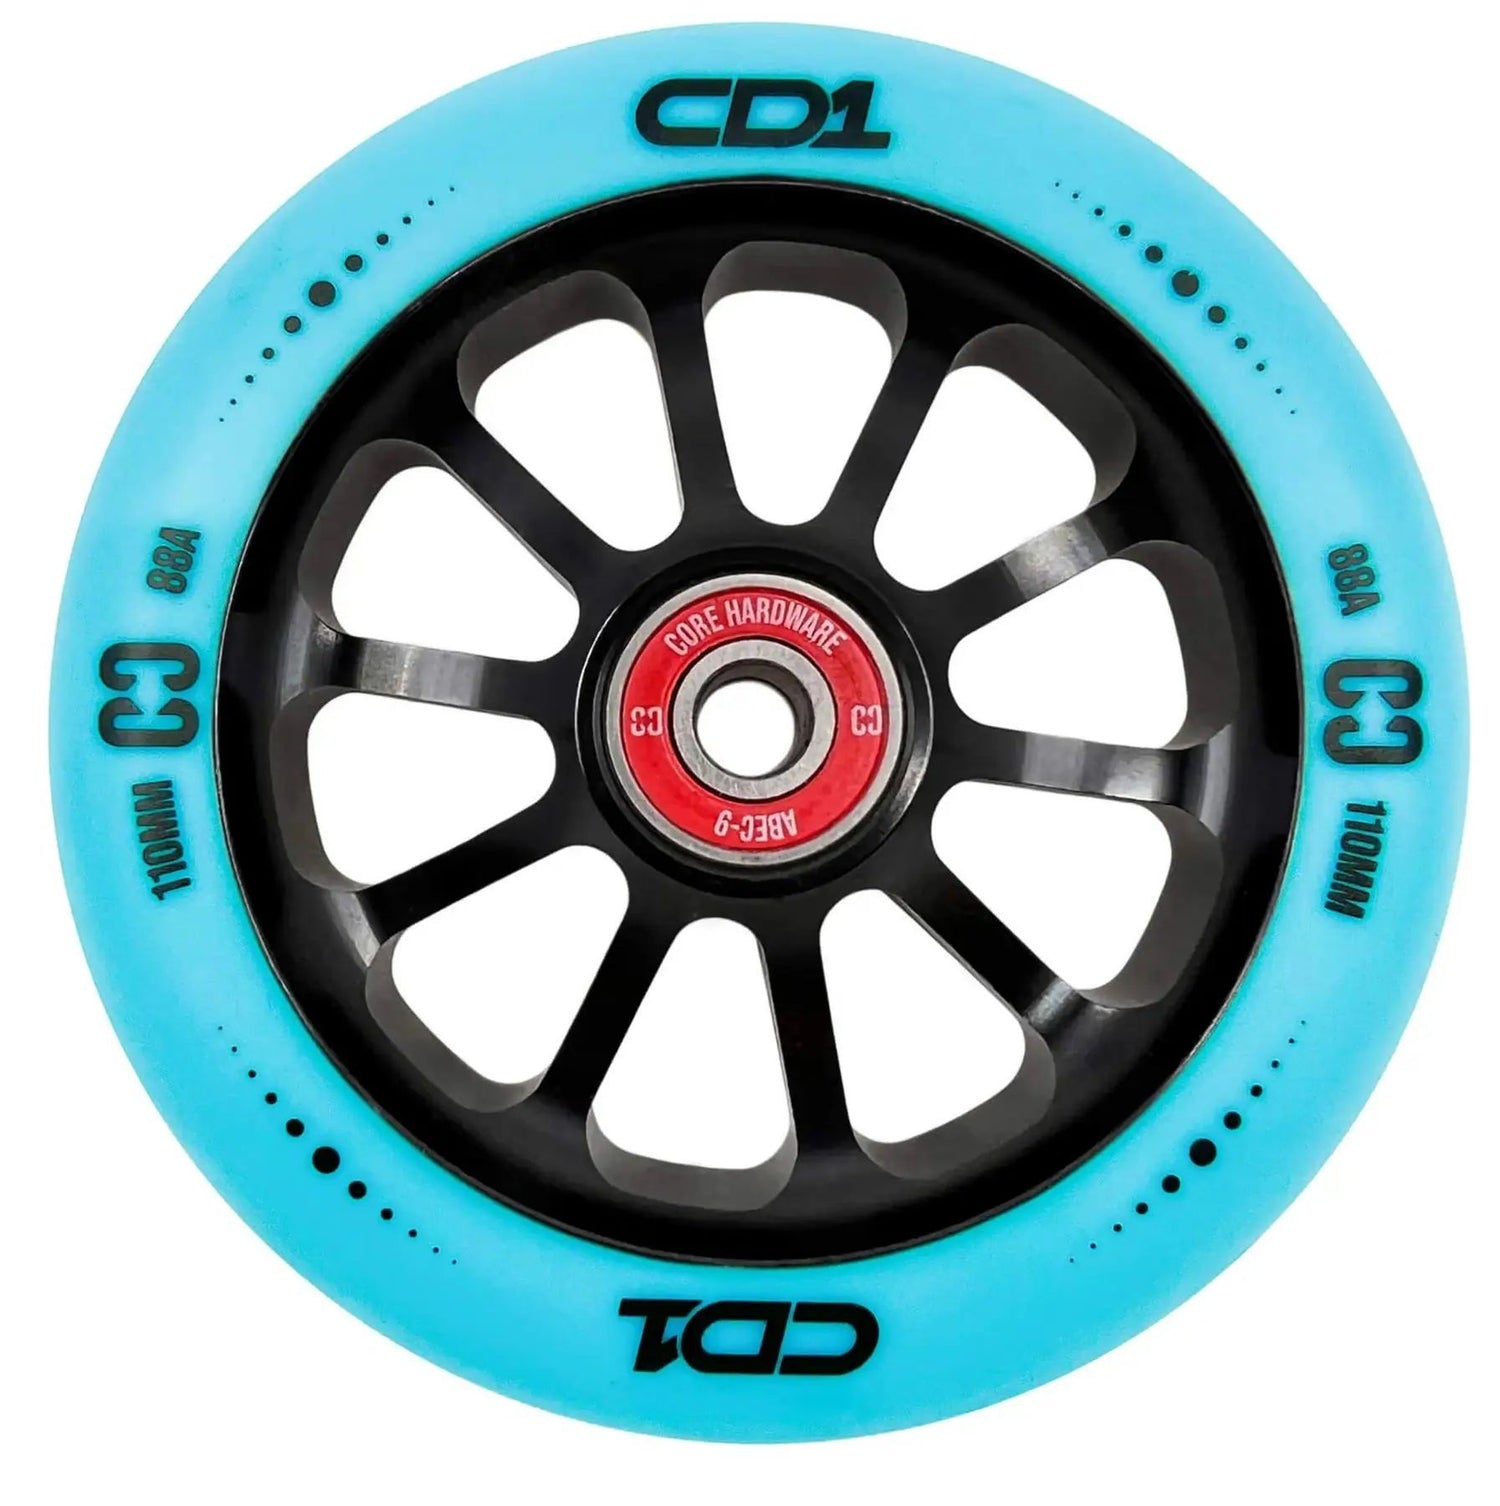 CORE CD1 Sparkcykel Hjul (Blå)